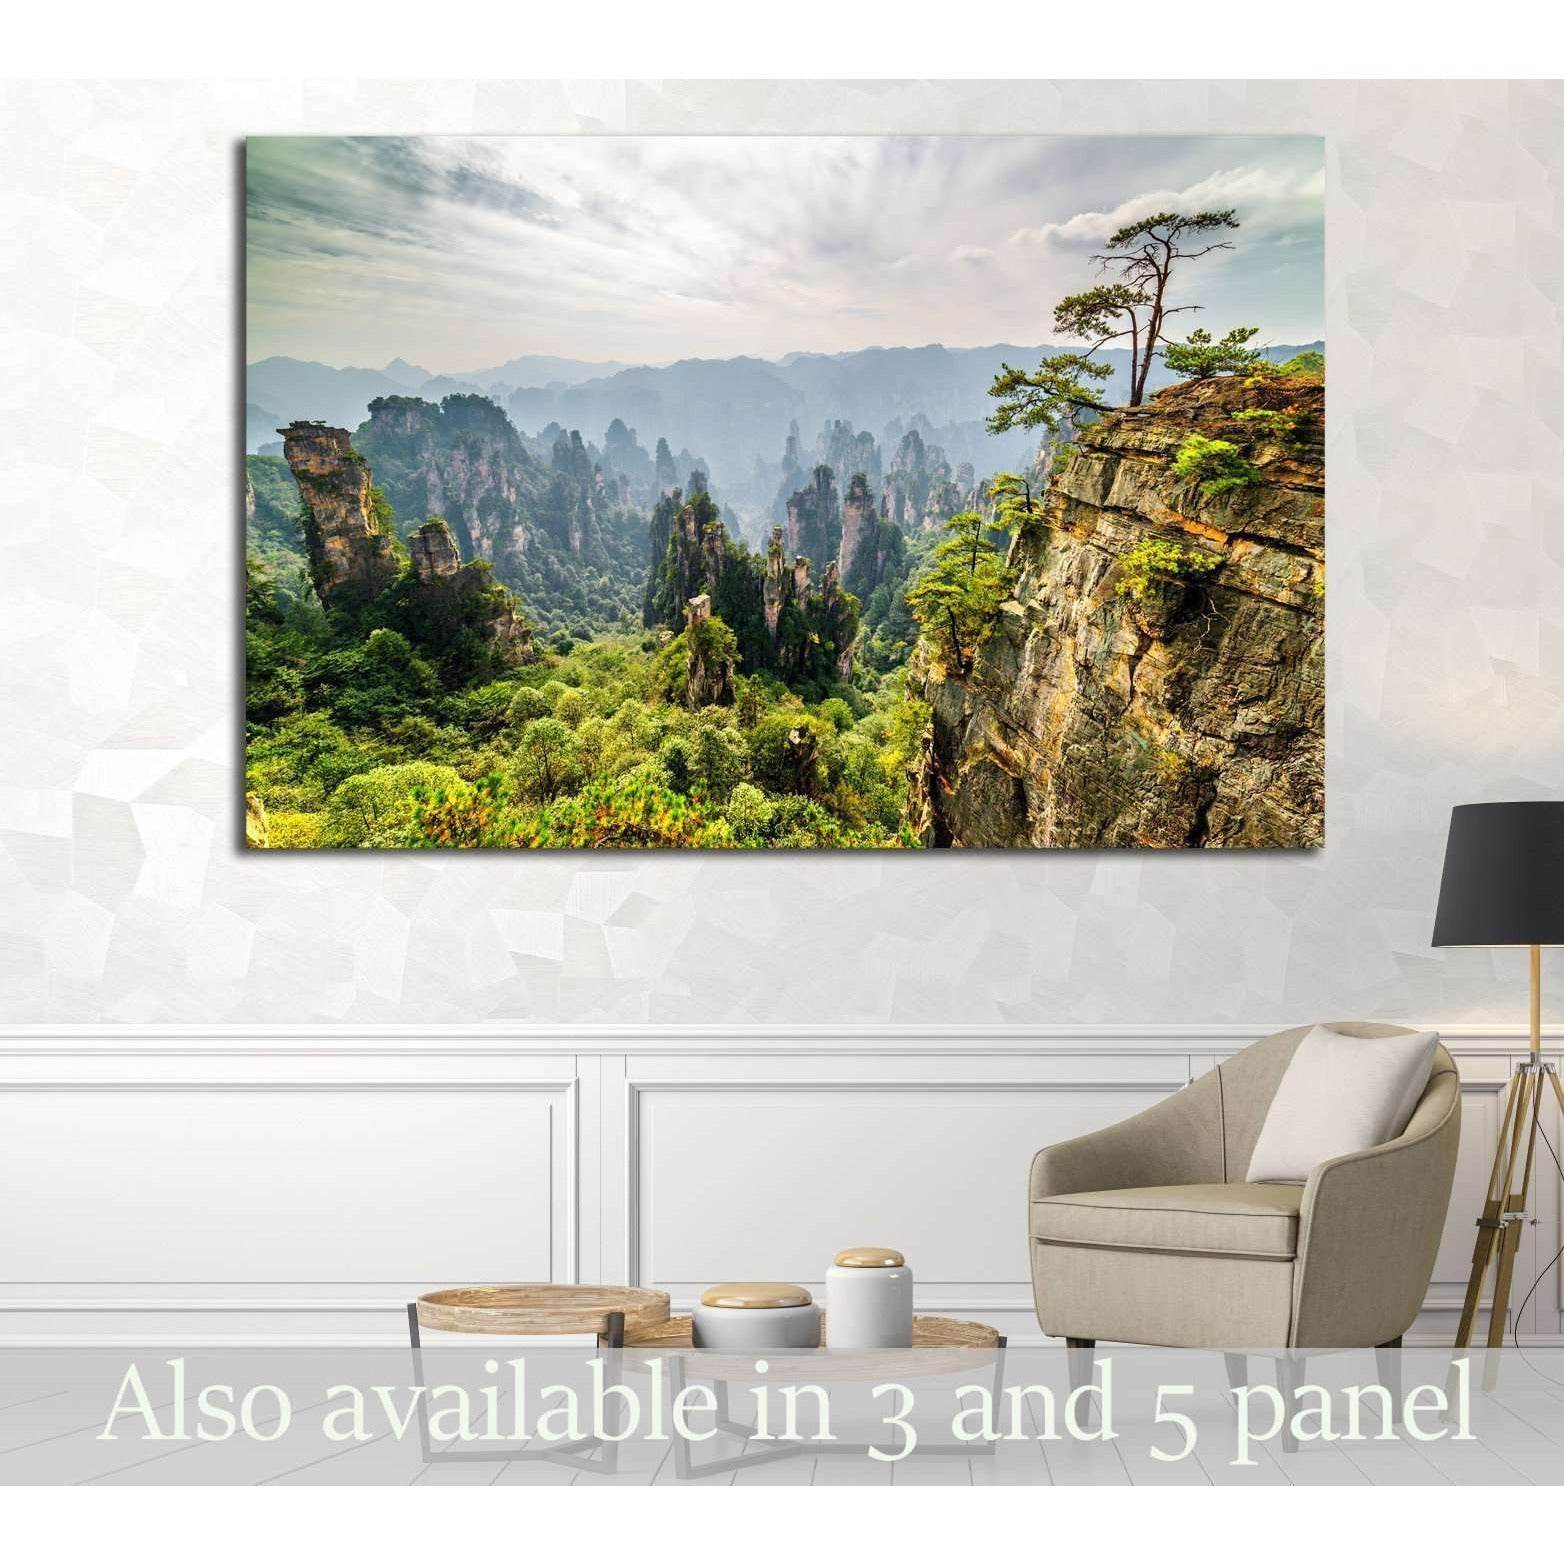 Tianzi Mountains (Avatar Mountains), Zhangjiajie National Forest Park, China №1988 Ready to Hang Canvas Print